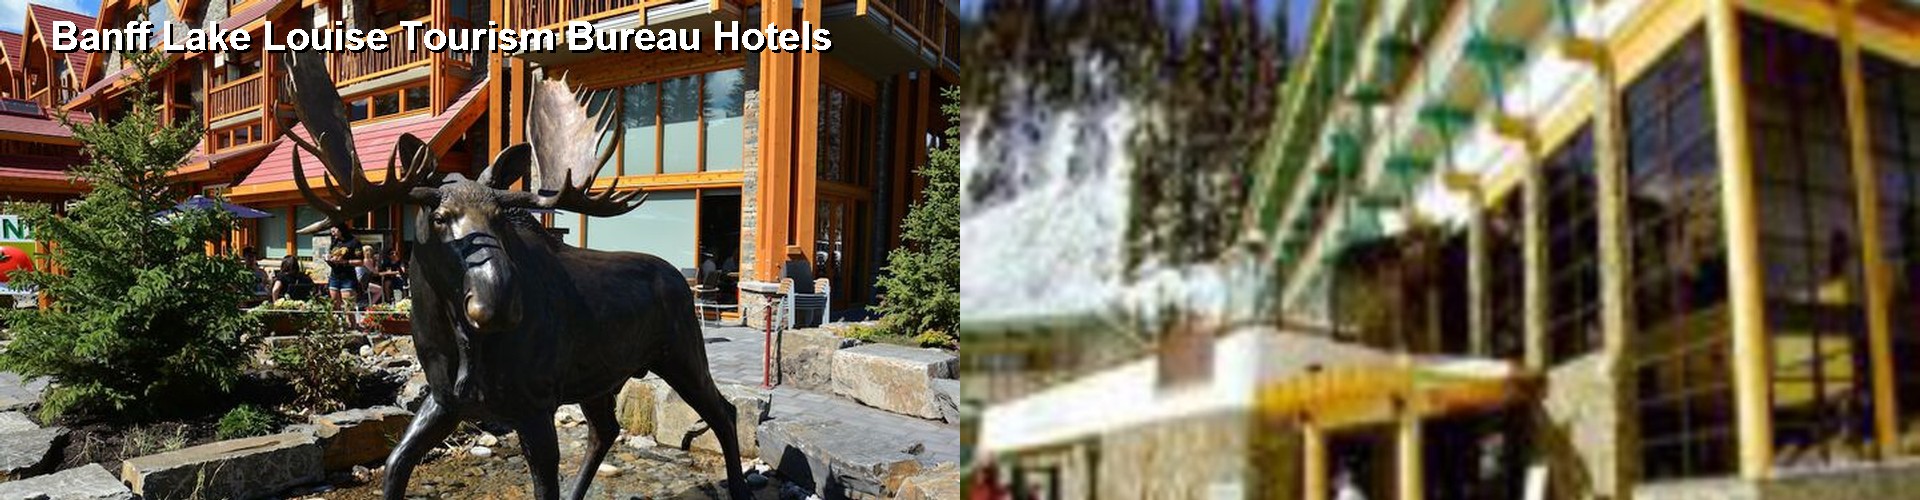 5 Best Hotels near Banff Lake Louise Tourism Bureau